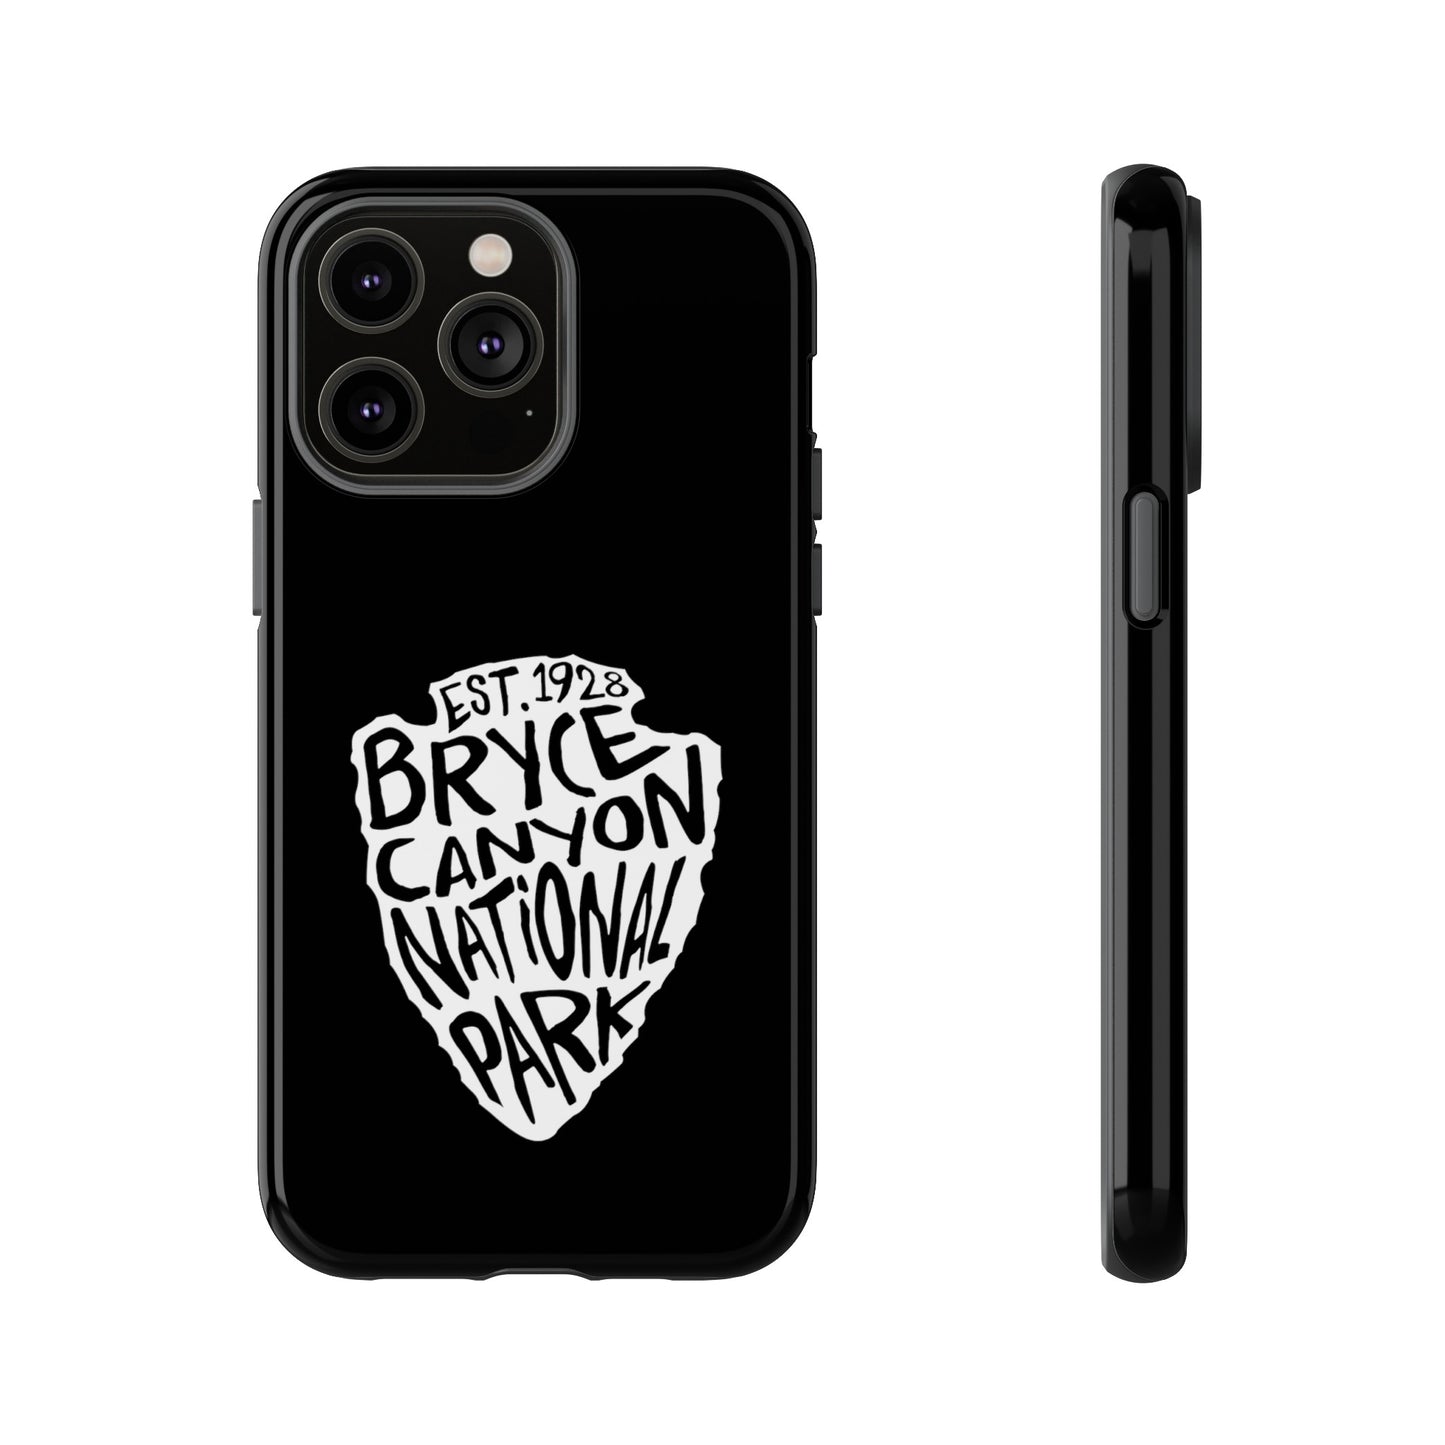 Bryce Canyon National Park Phone Case - Arrowhead Design